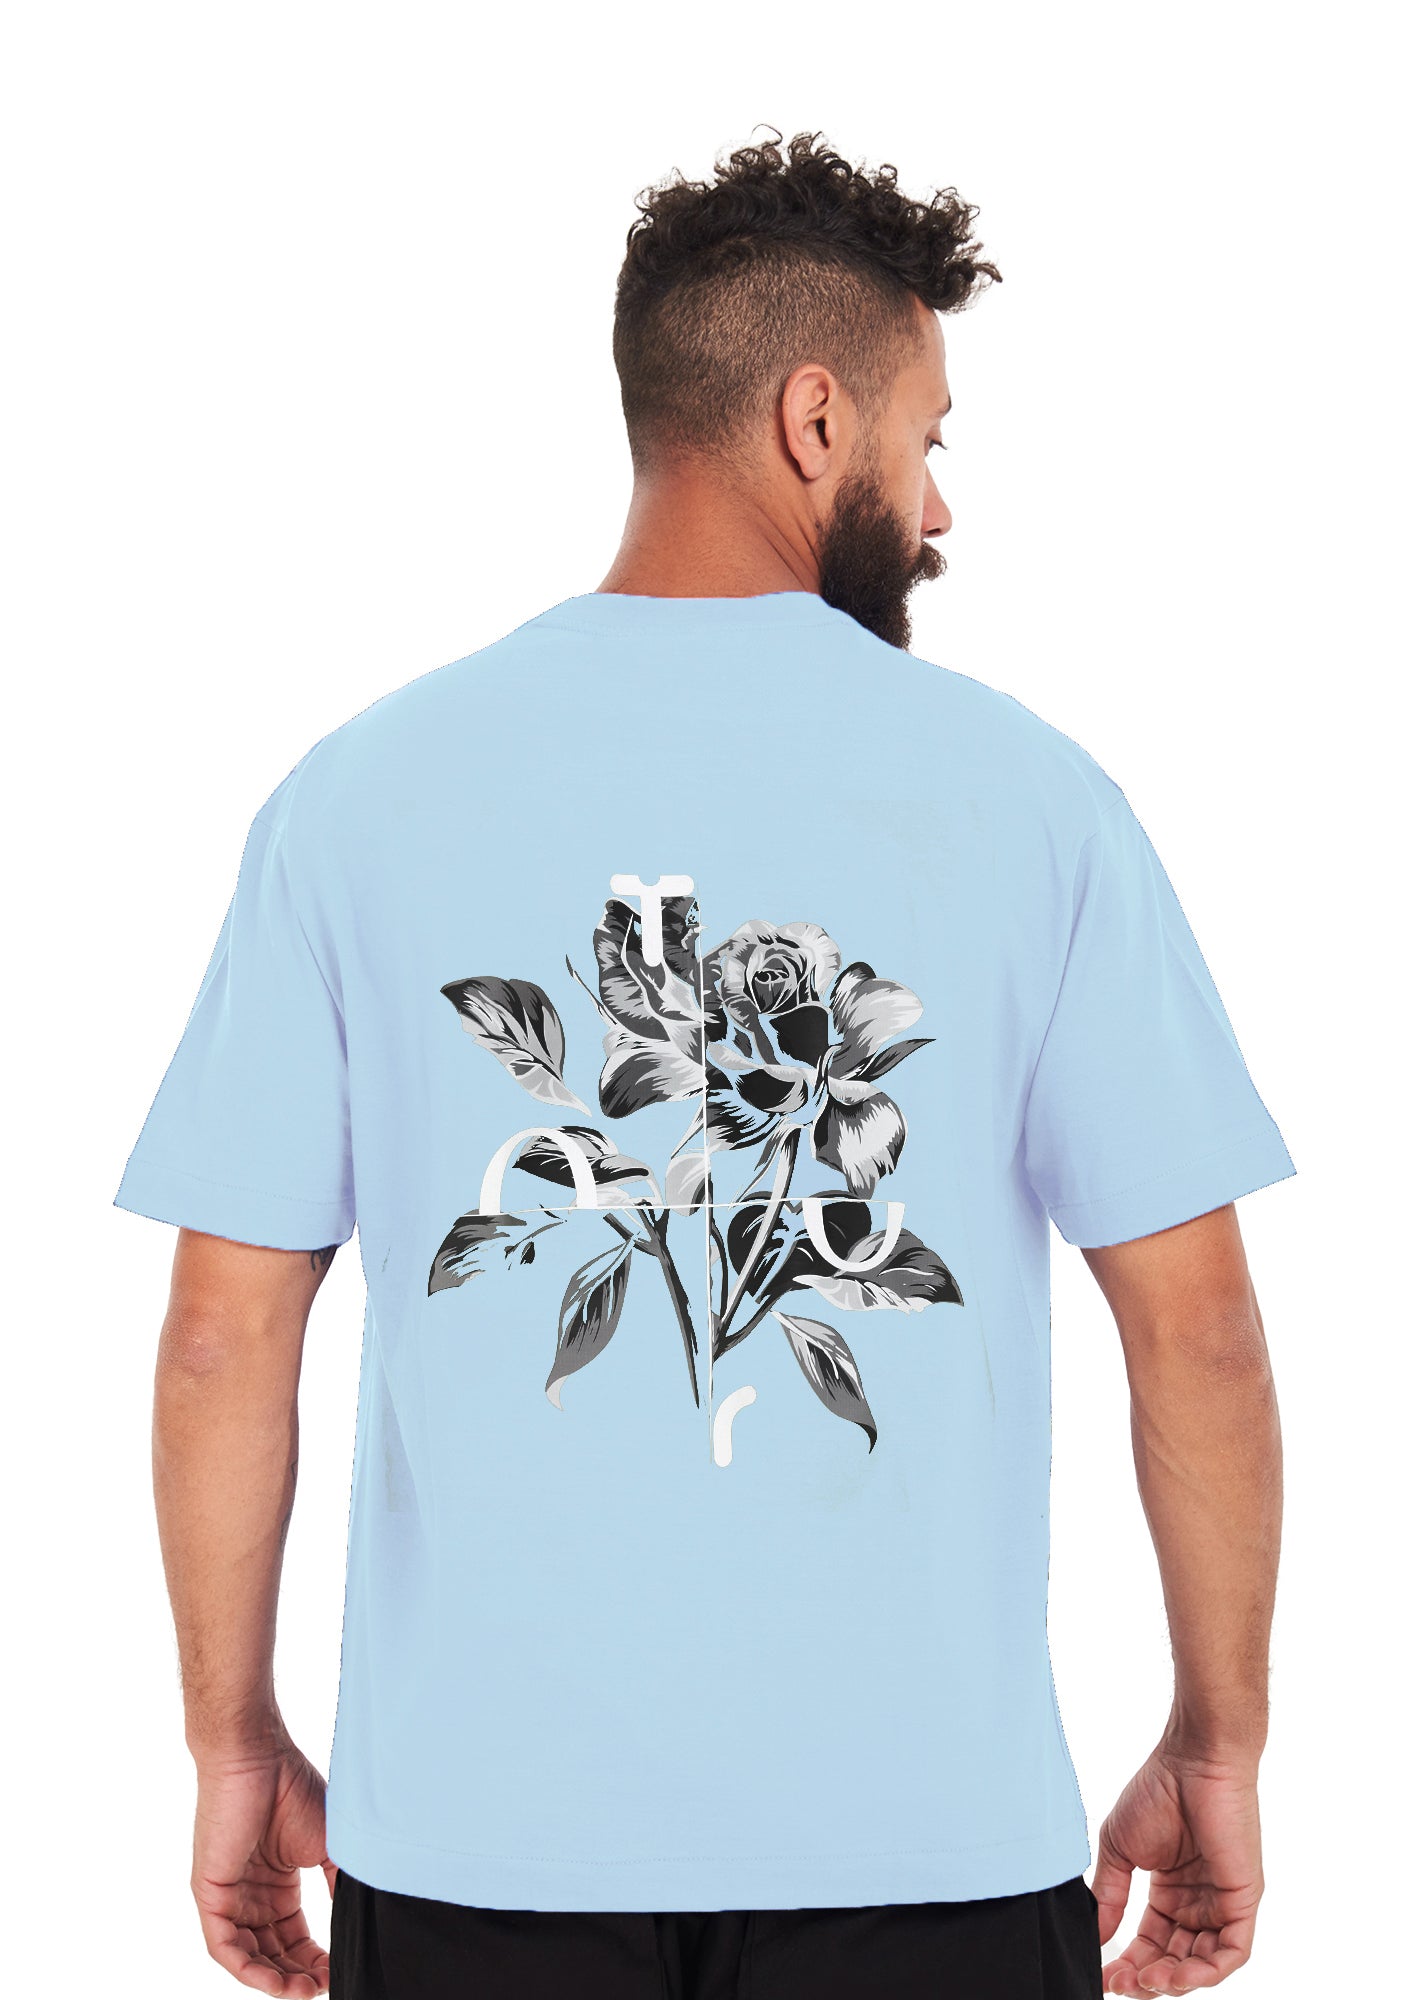 Flower Tee Oversized printed Sky blue T-shirt .